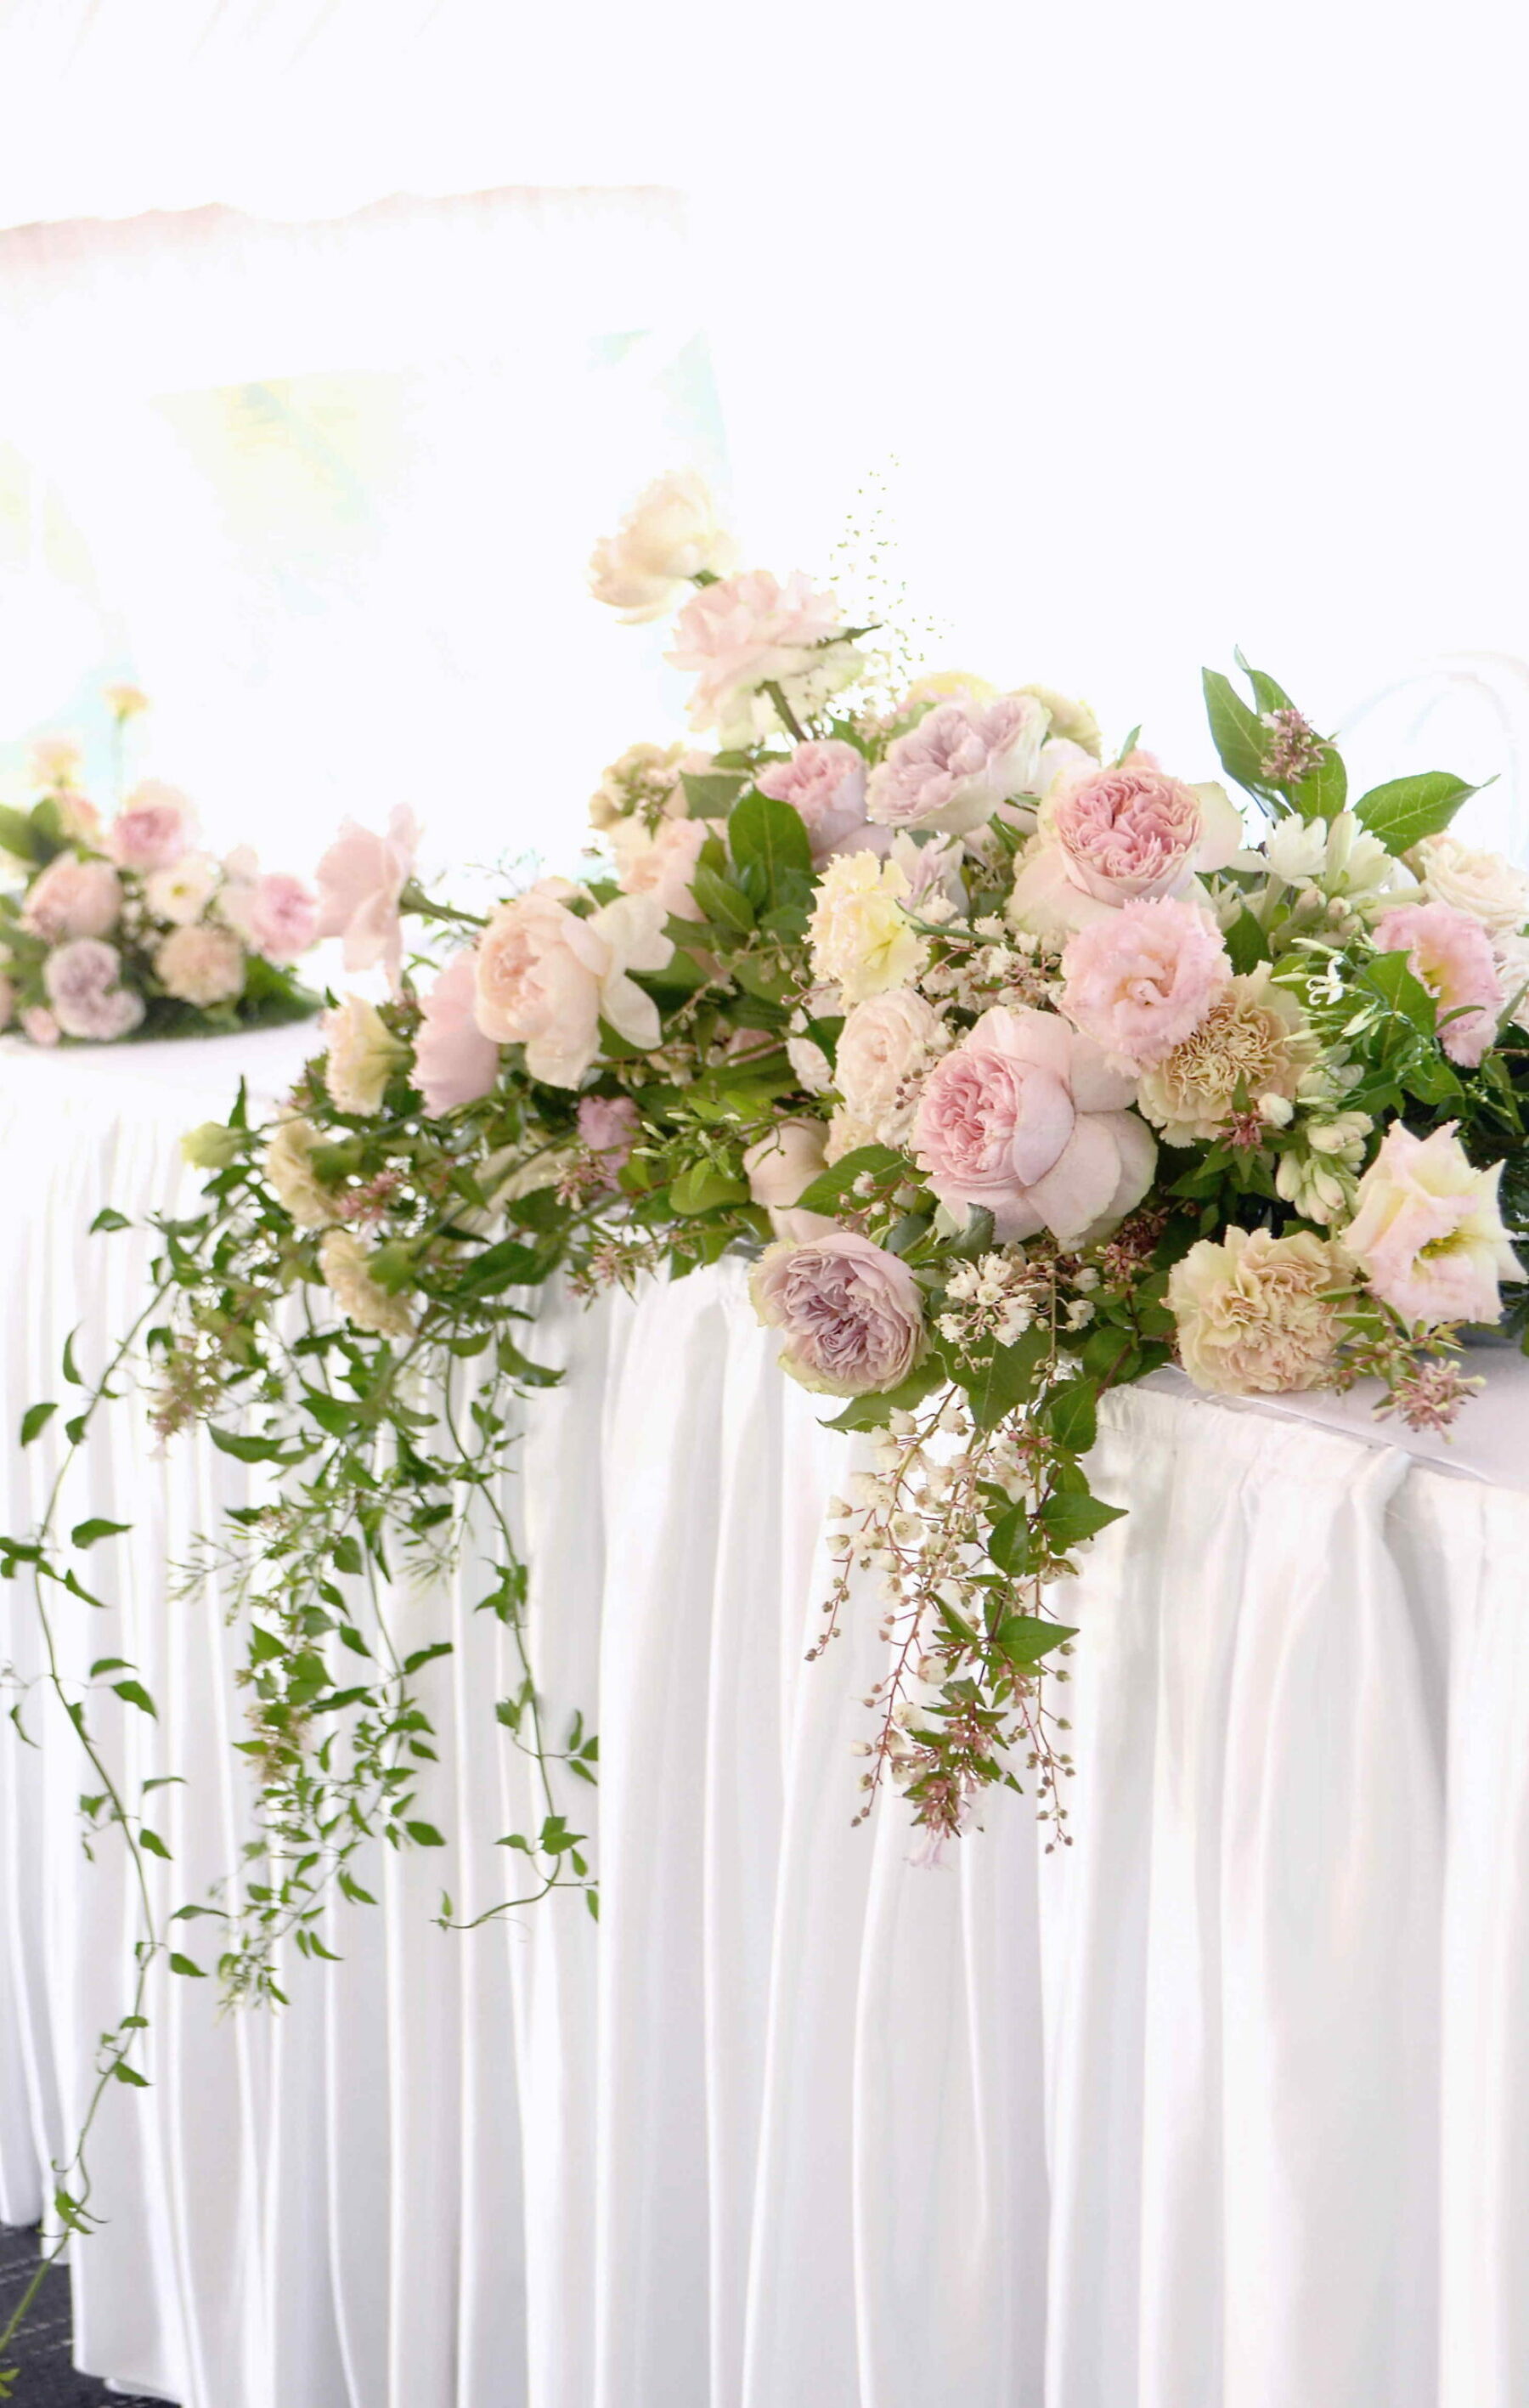 Perth Wedding Florist - Garden Bridal Table Flowers 9.jpg